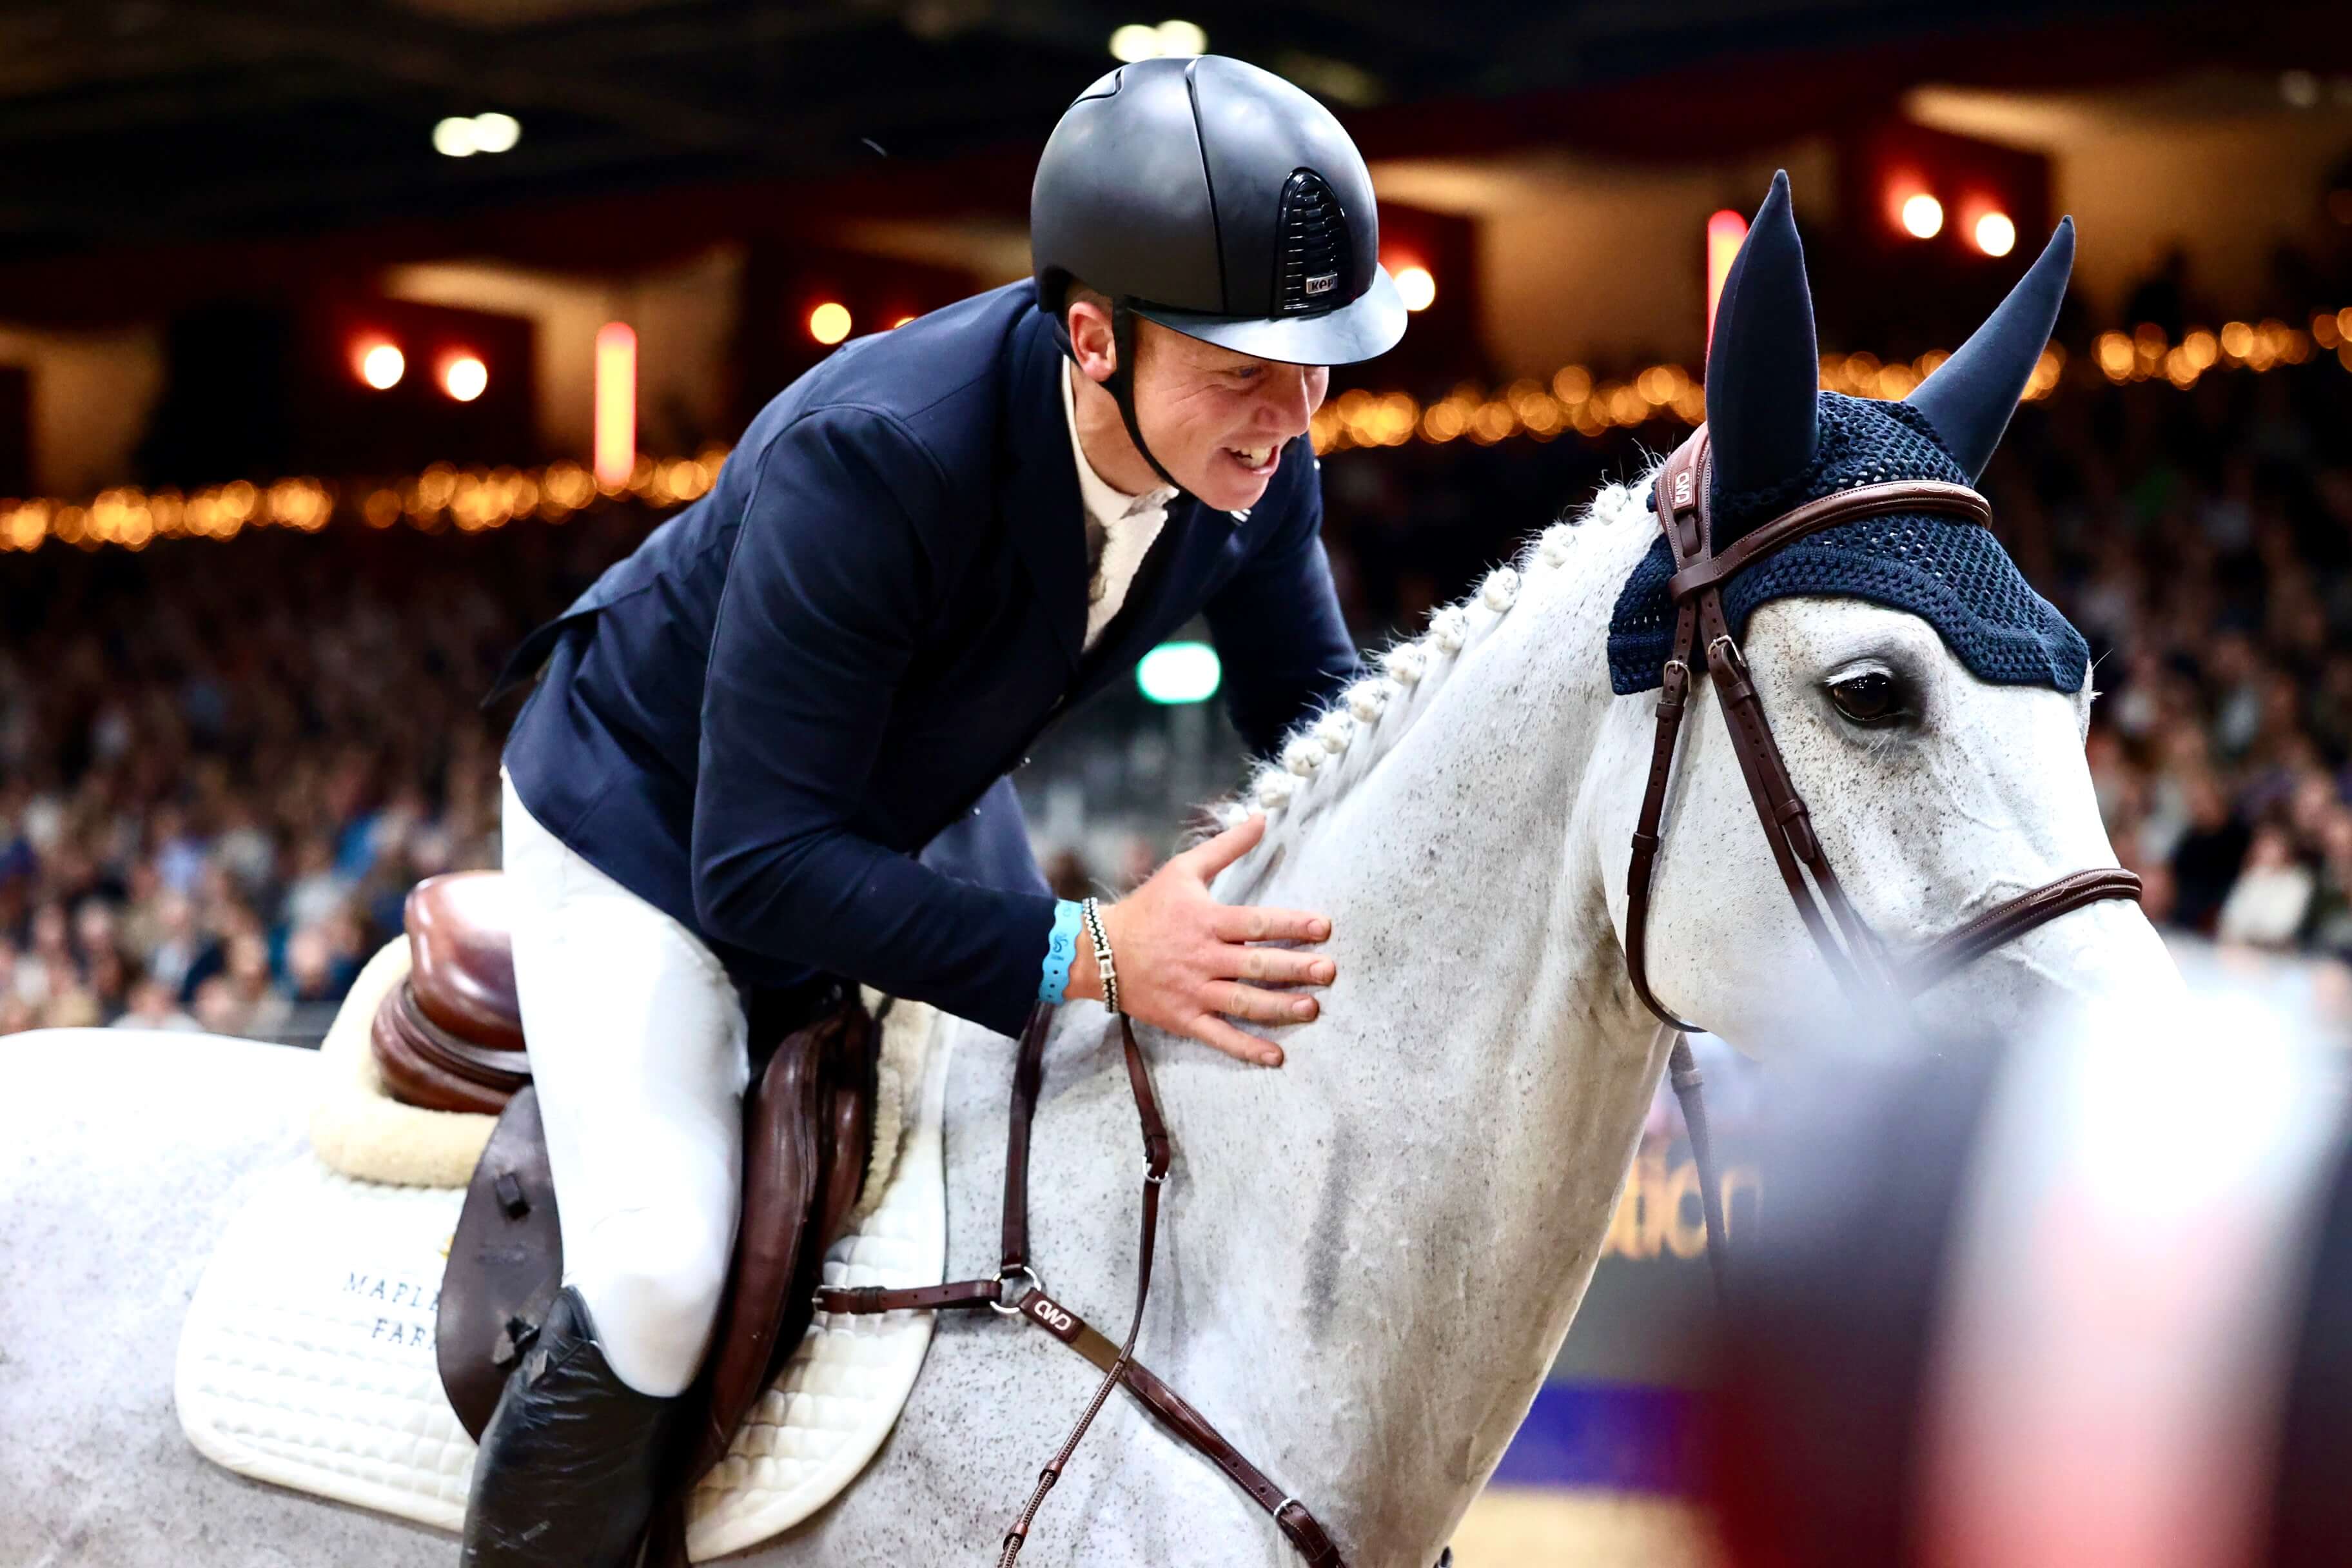 Matthew Sampson rewarded as 'Leading Rider' at London International Horse Show 2023